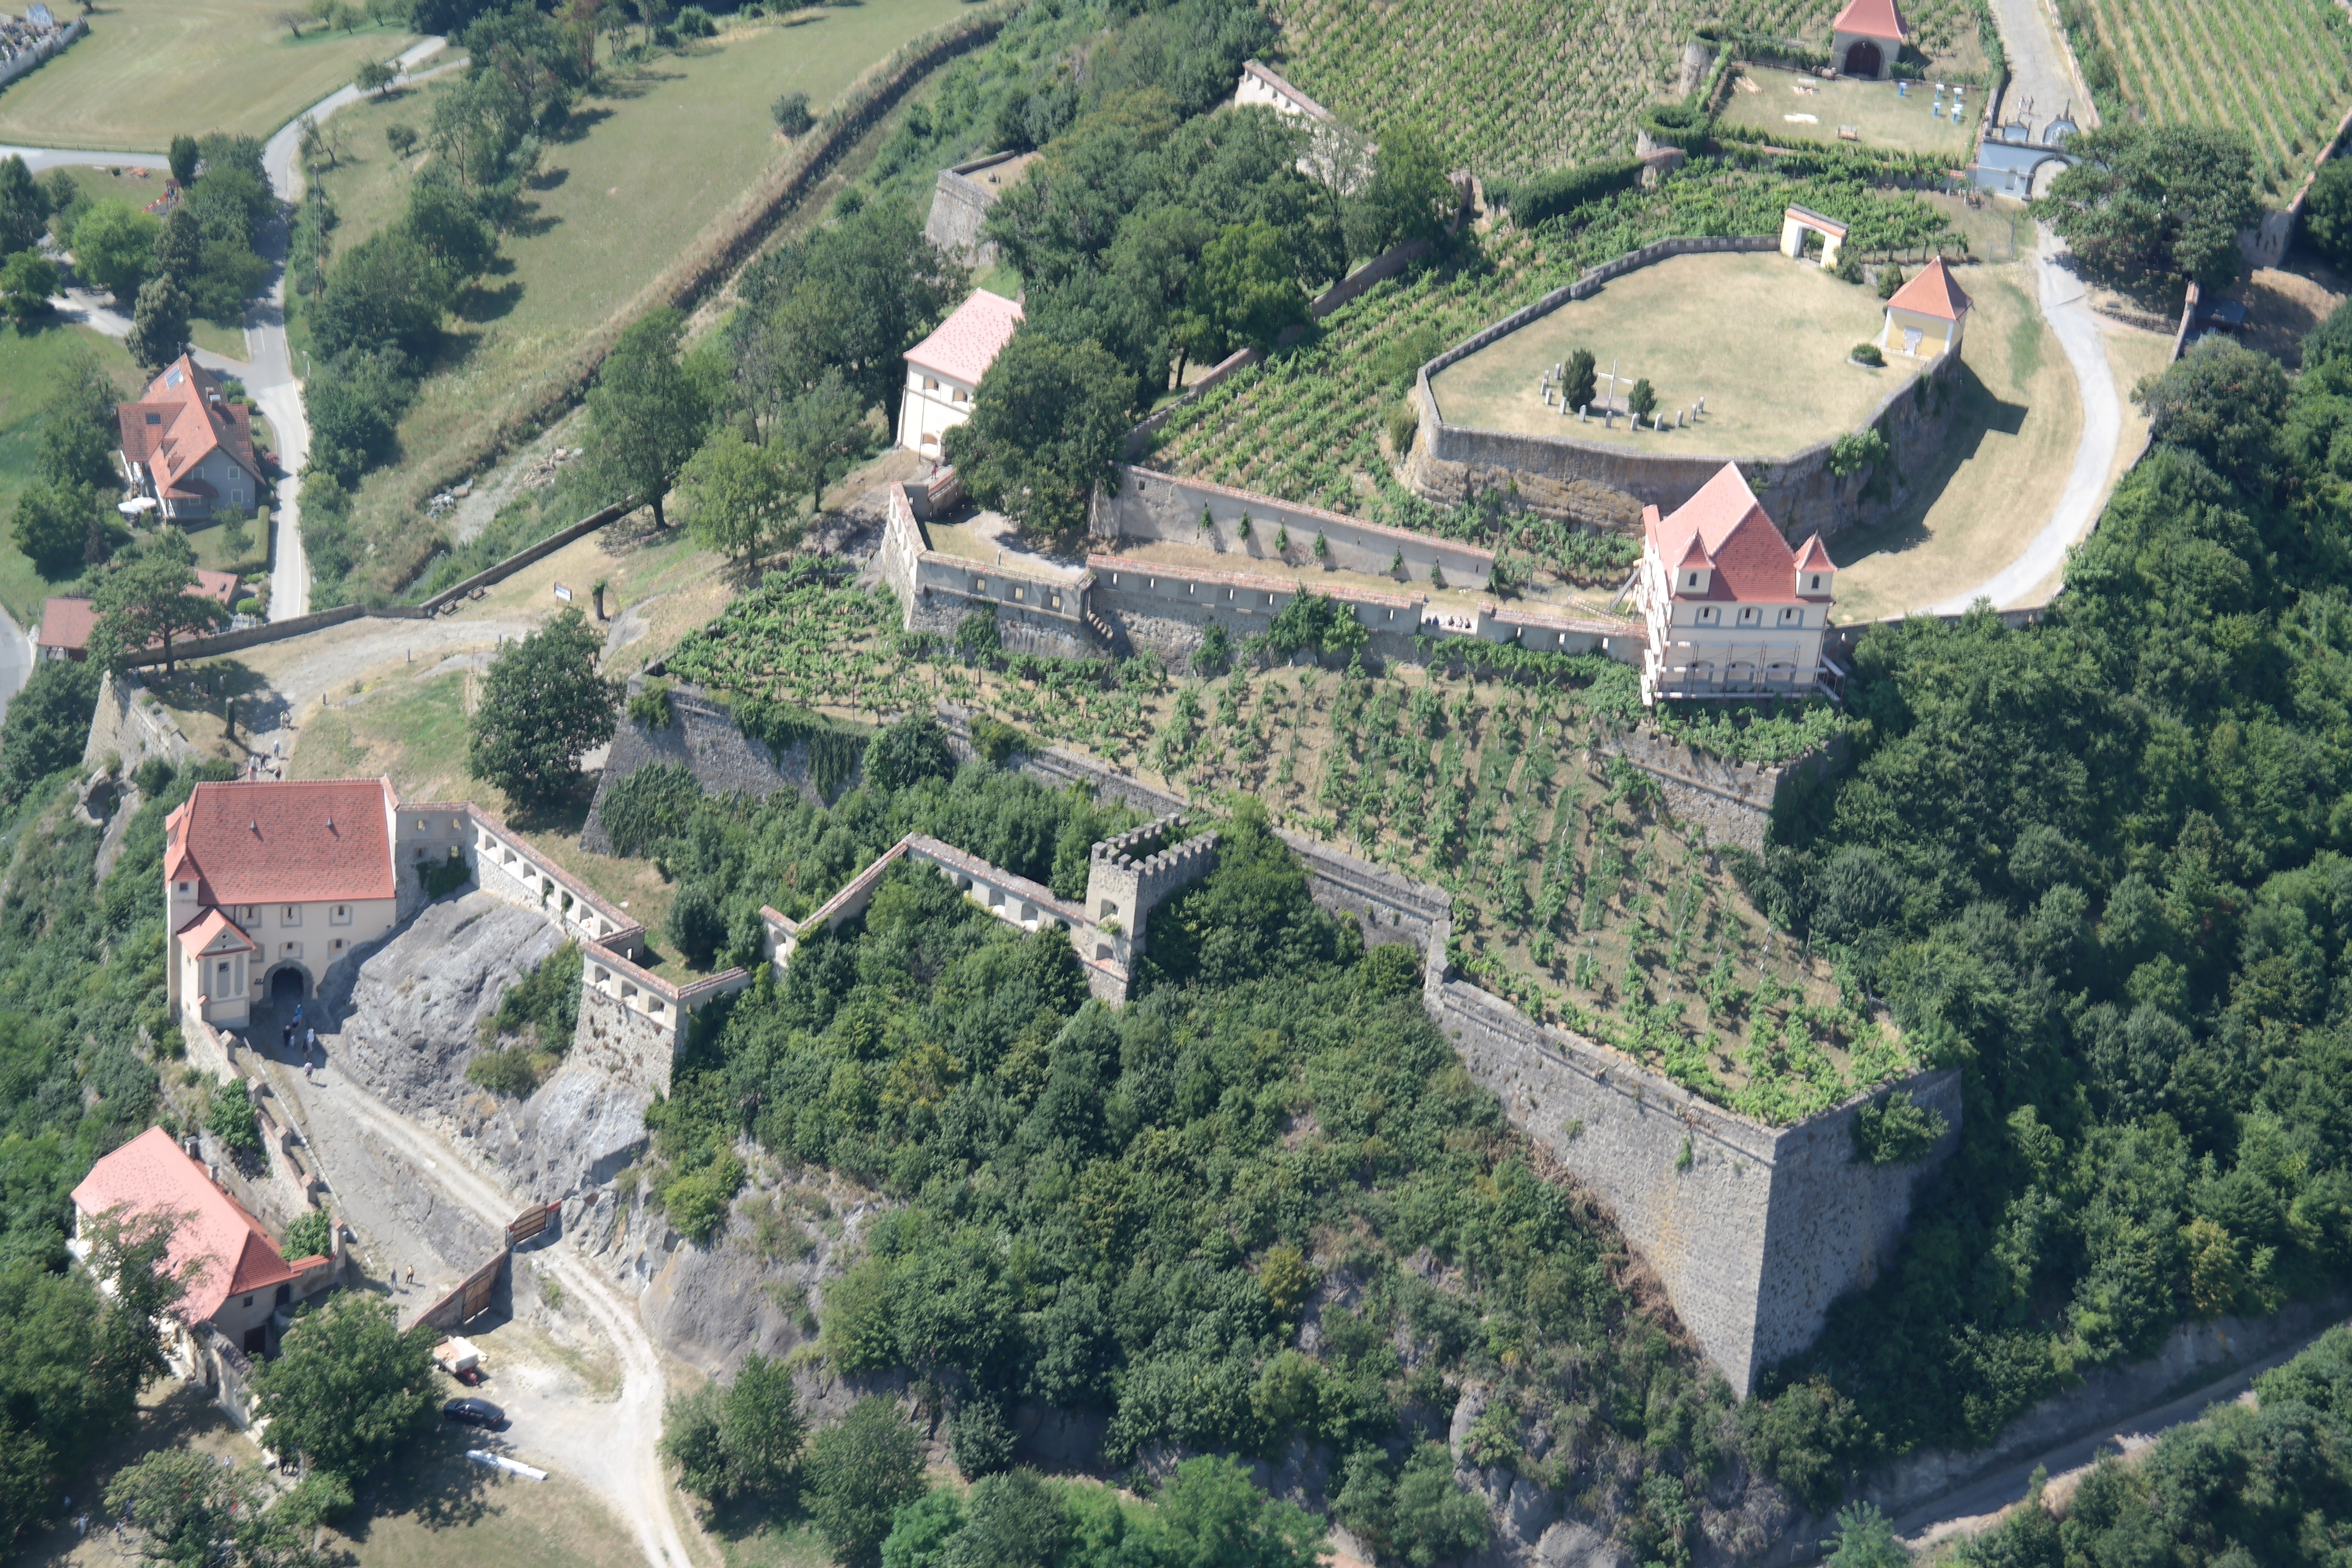 aerial view of village